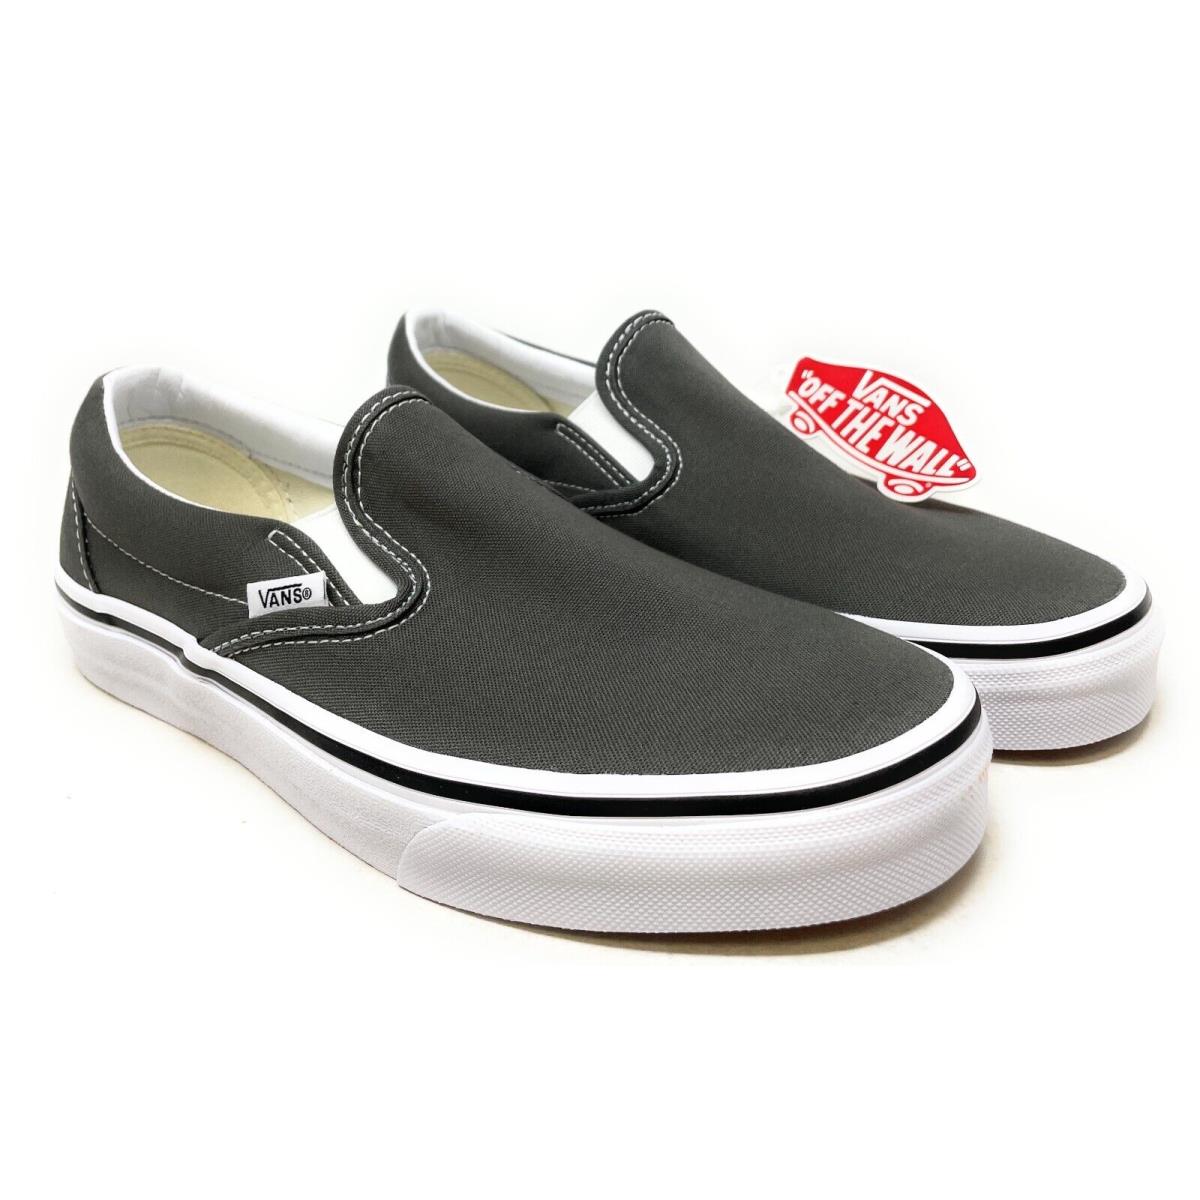 Vans Mens Classic Slip-on Skateboarding Shoes Charcoal Gray